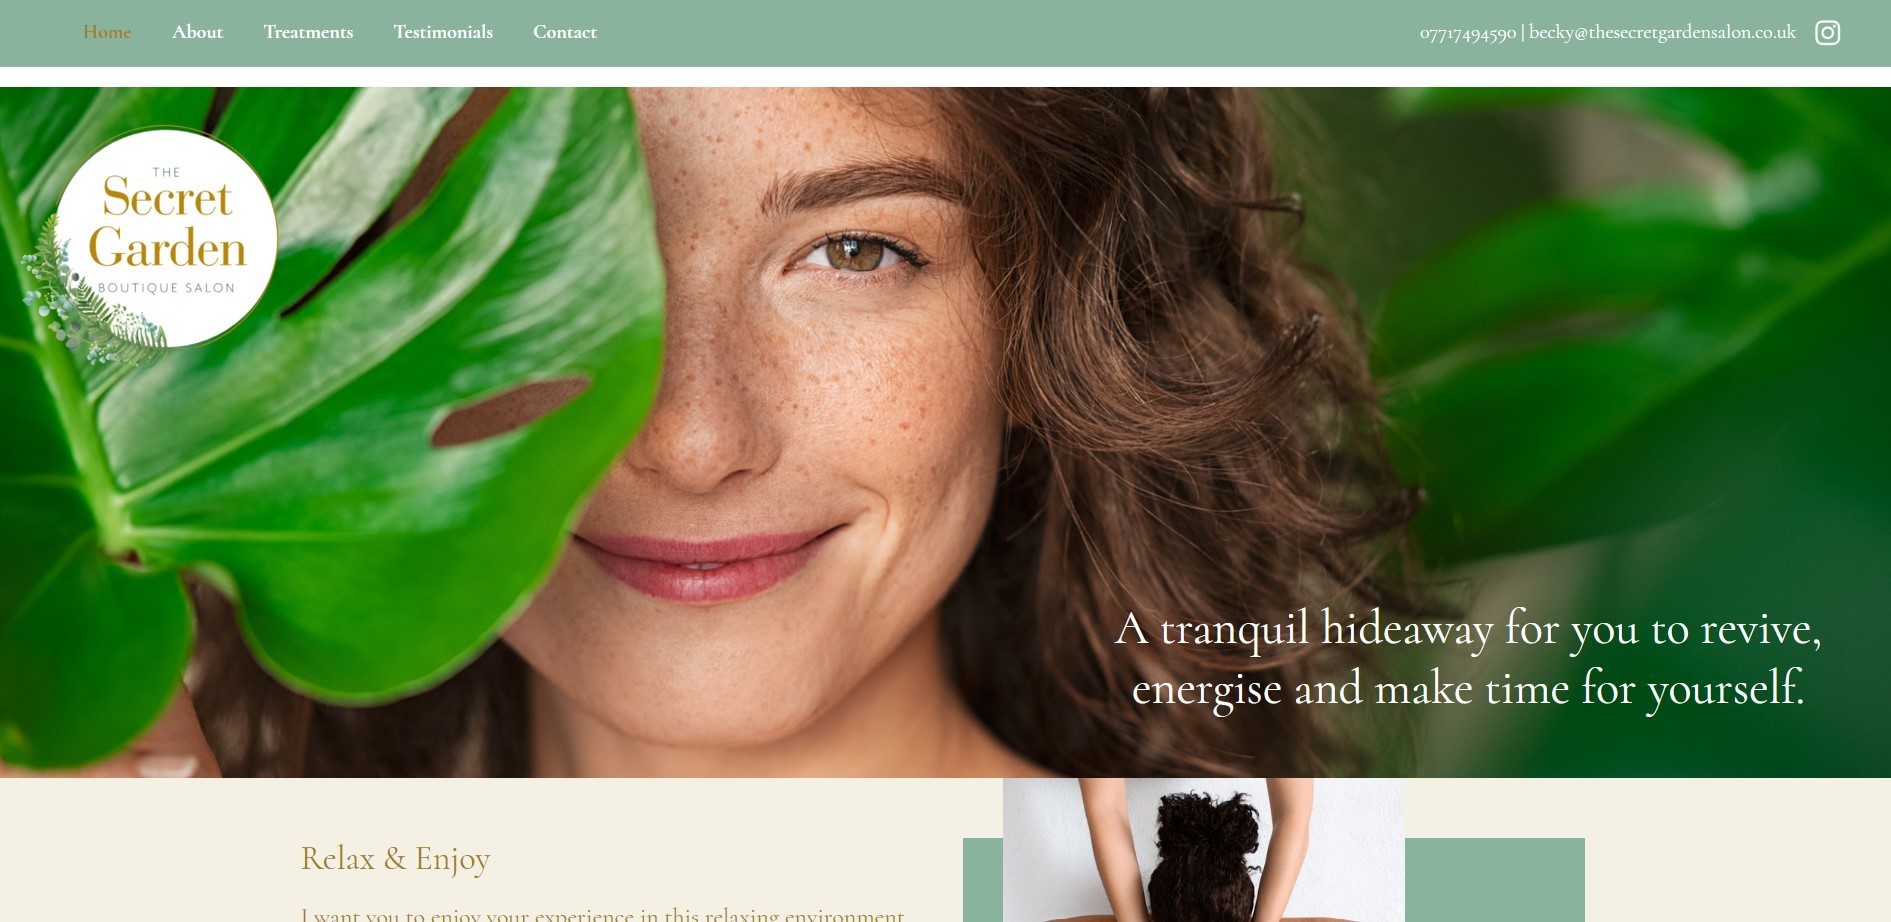 A responsive website design for a reviving hideaway treat company